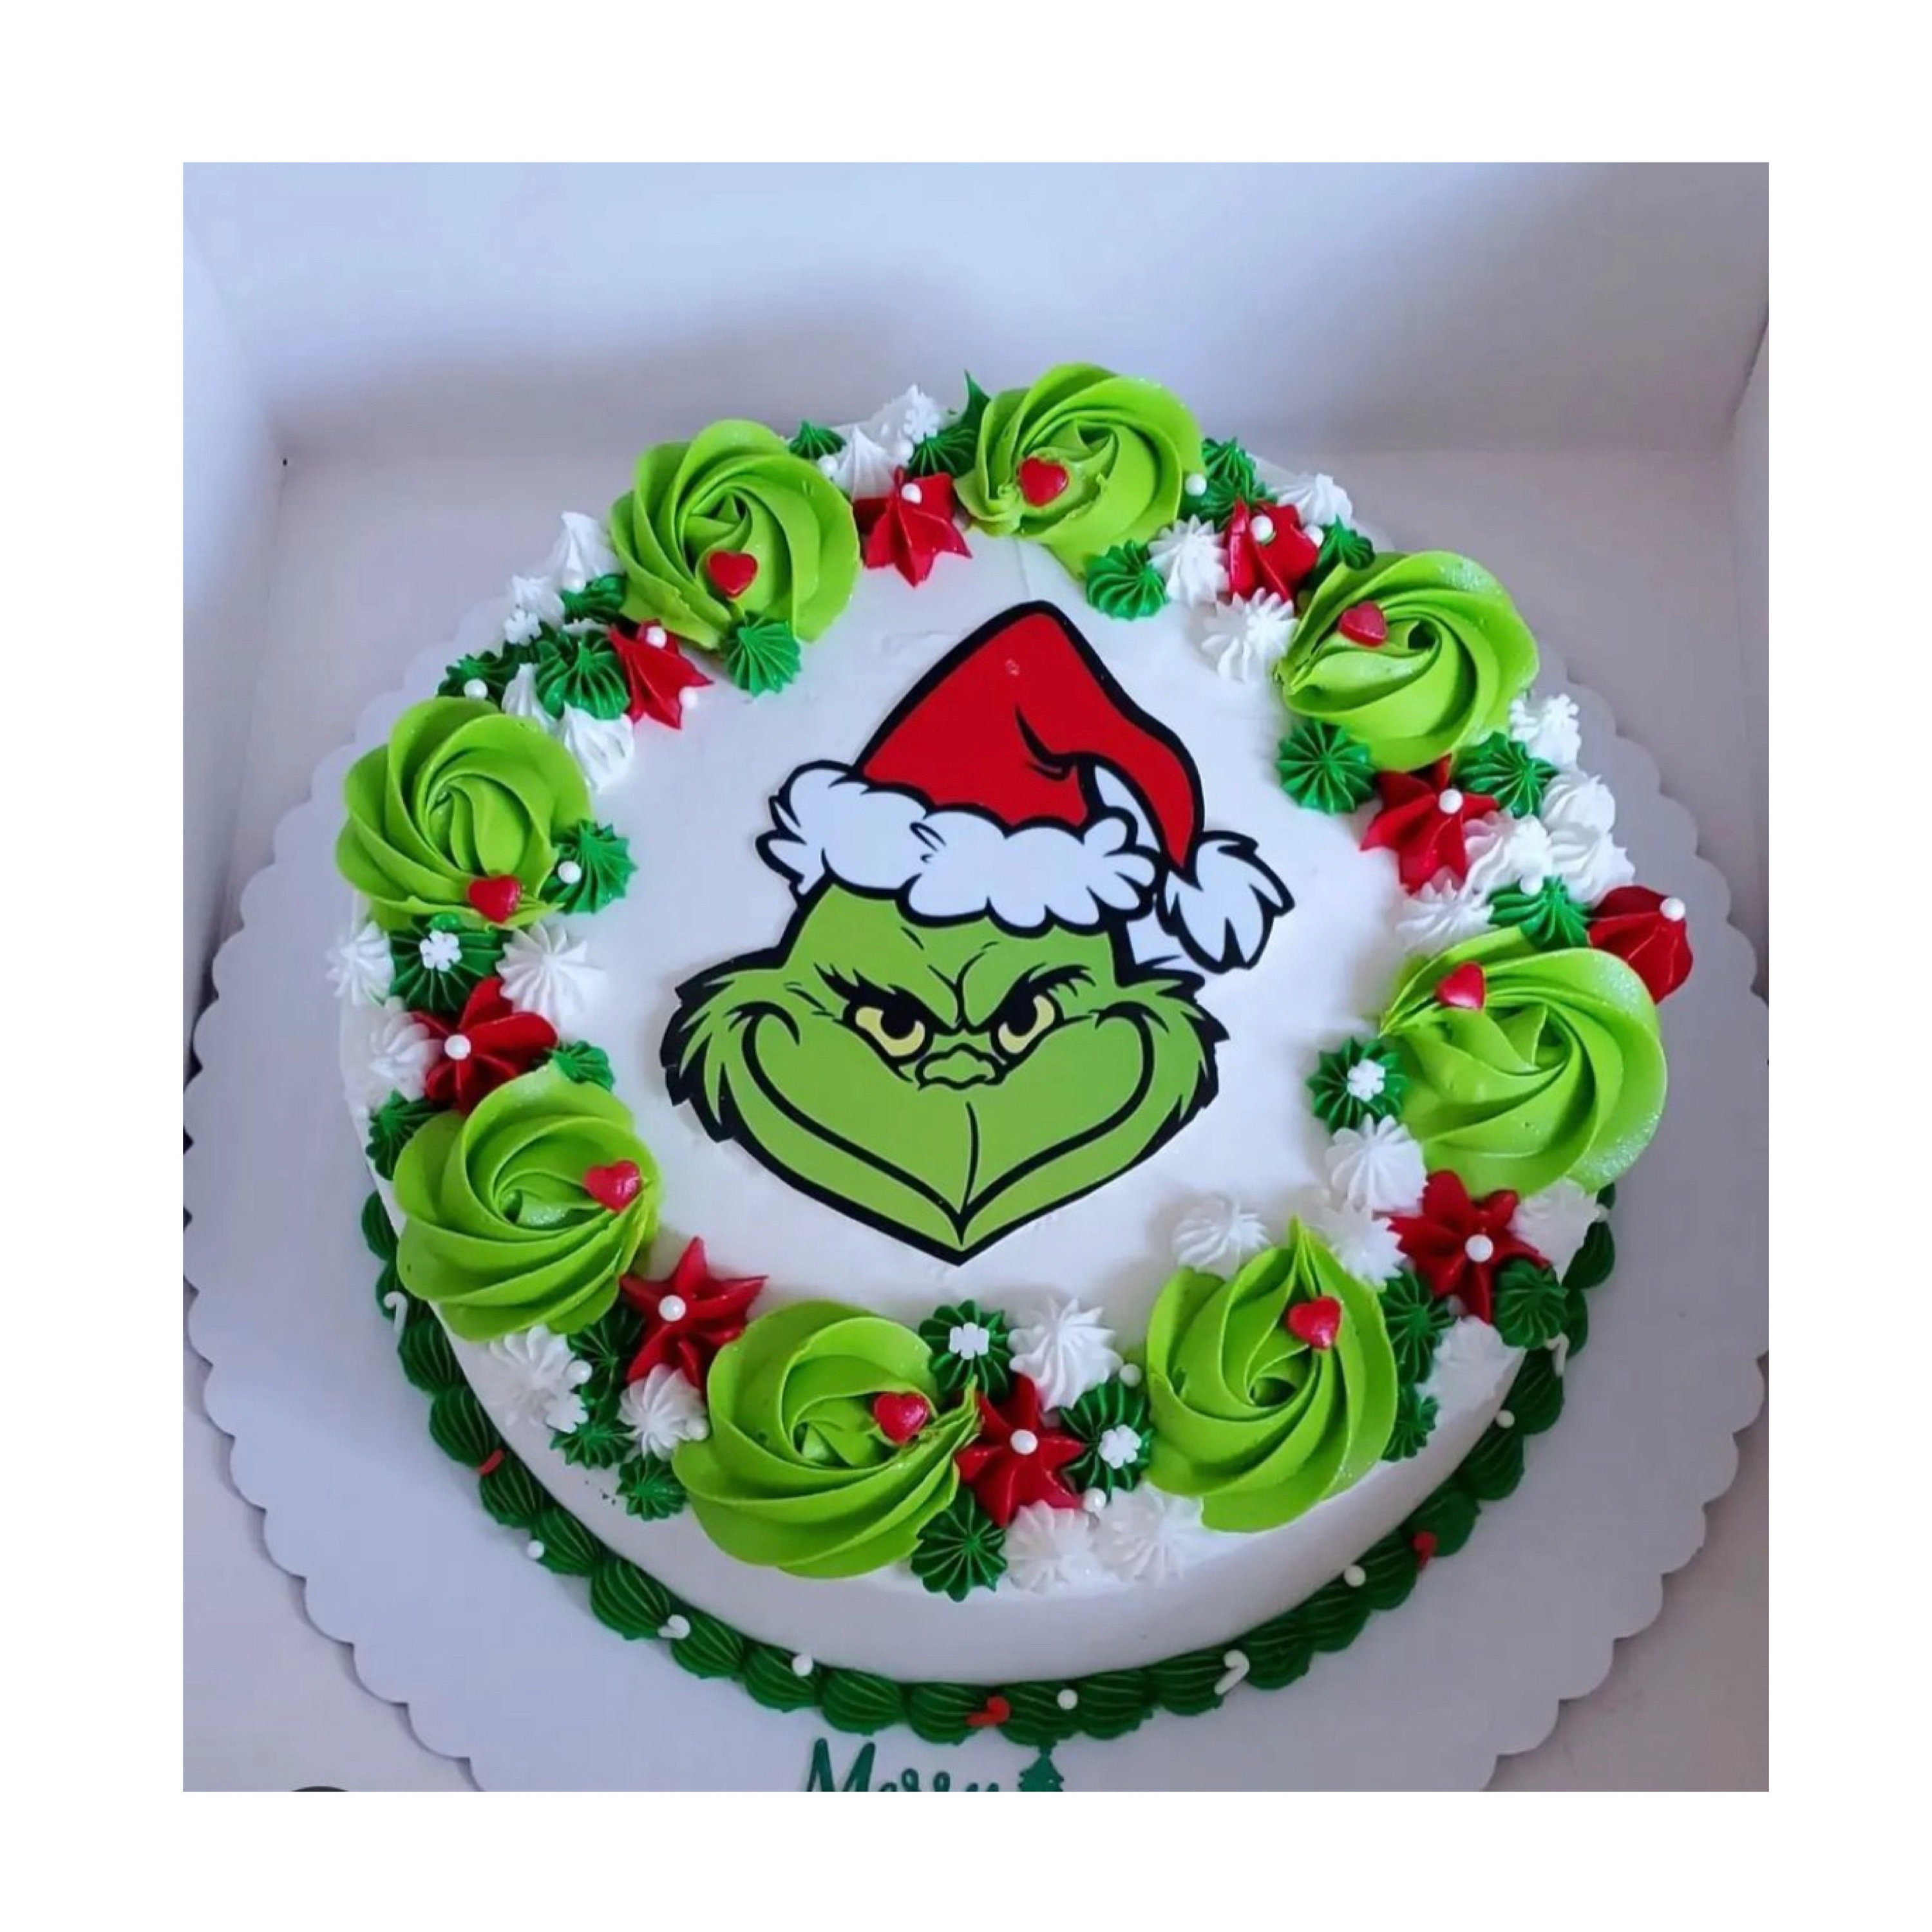 Grinch Cake for Christmas - The Bearfoot Baker